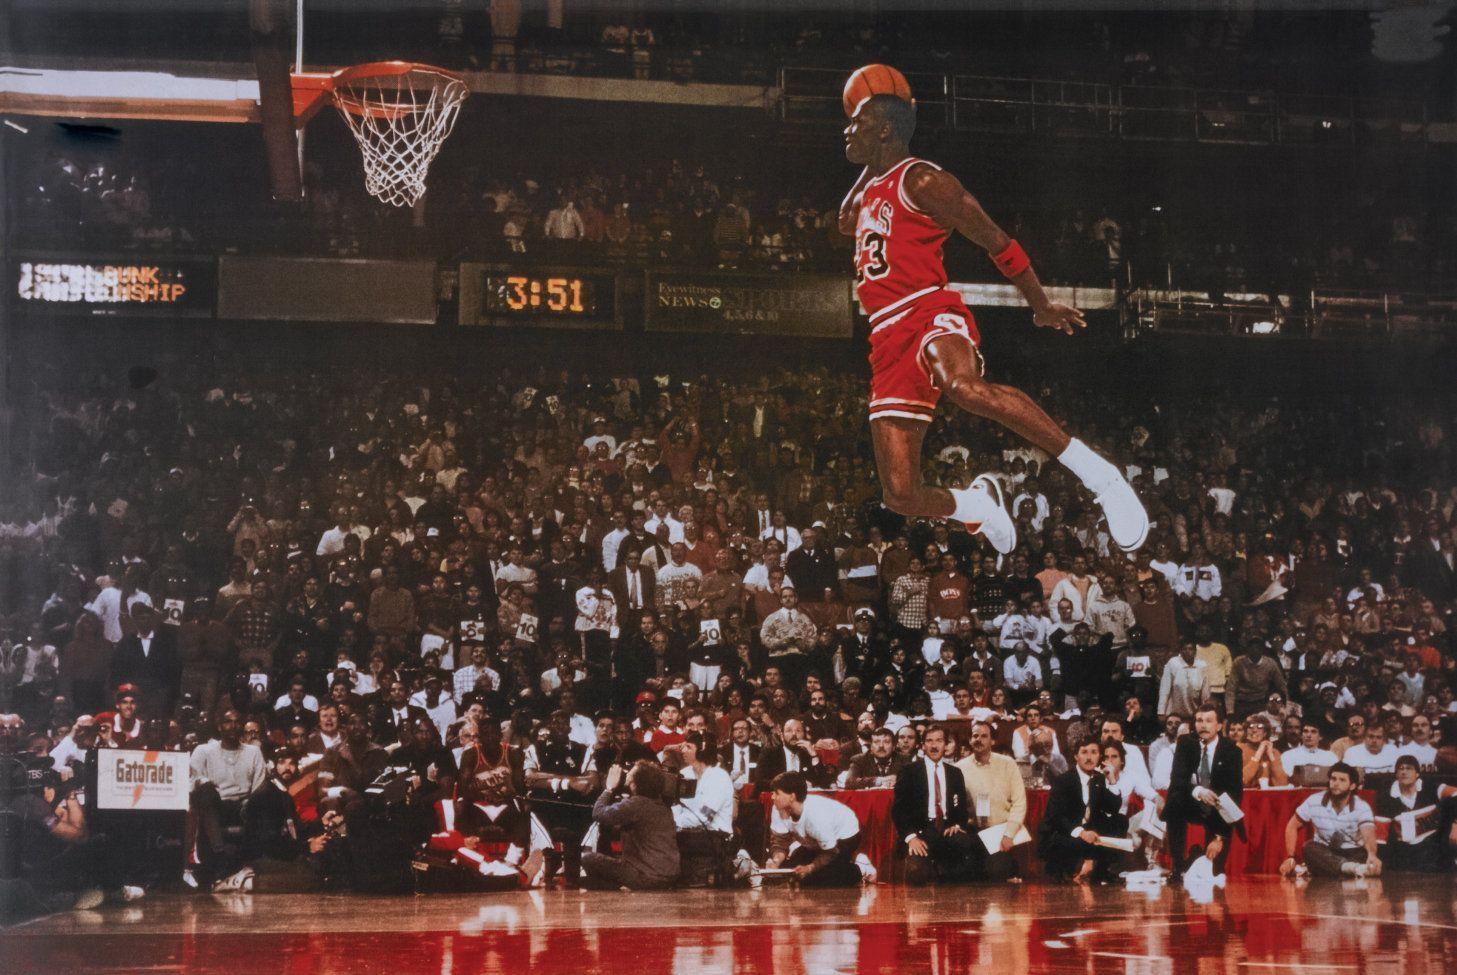 Michael Jordan Background